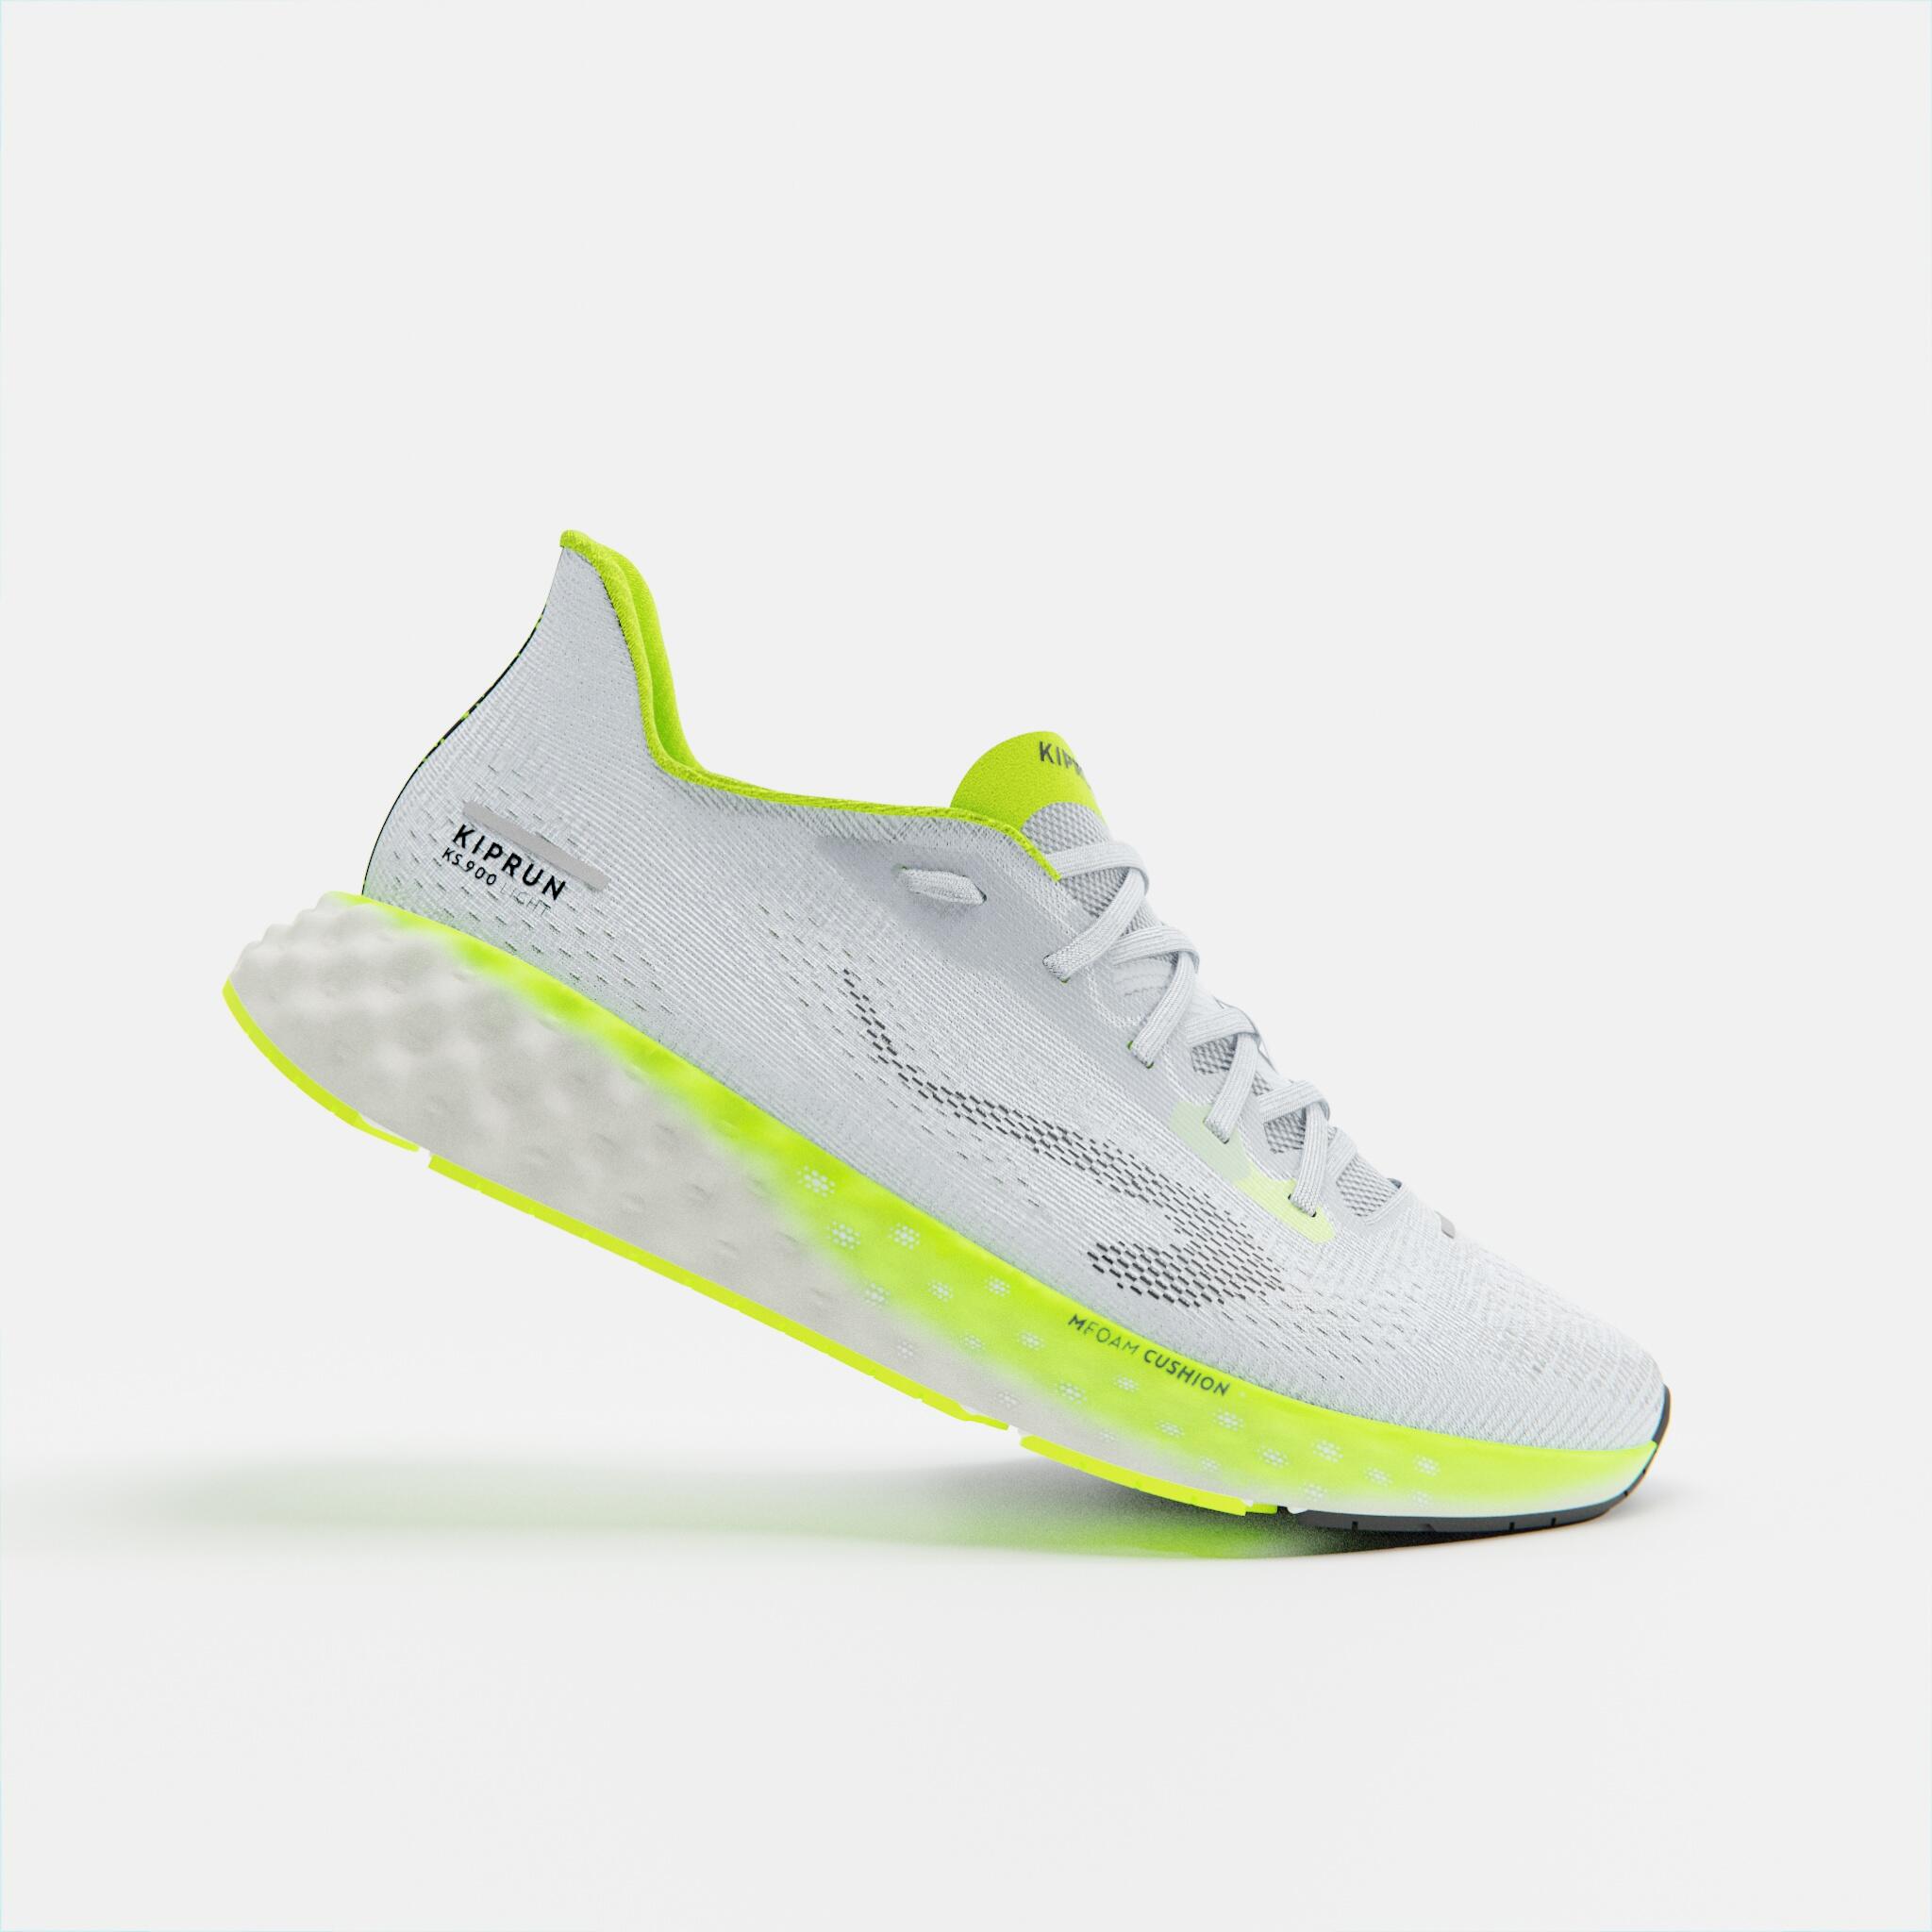 Men's KIPRUN KS900 Light running shoes - Grey/Yellow 1/12